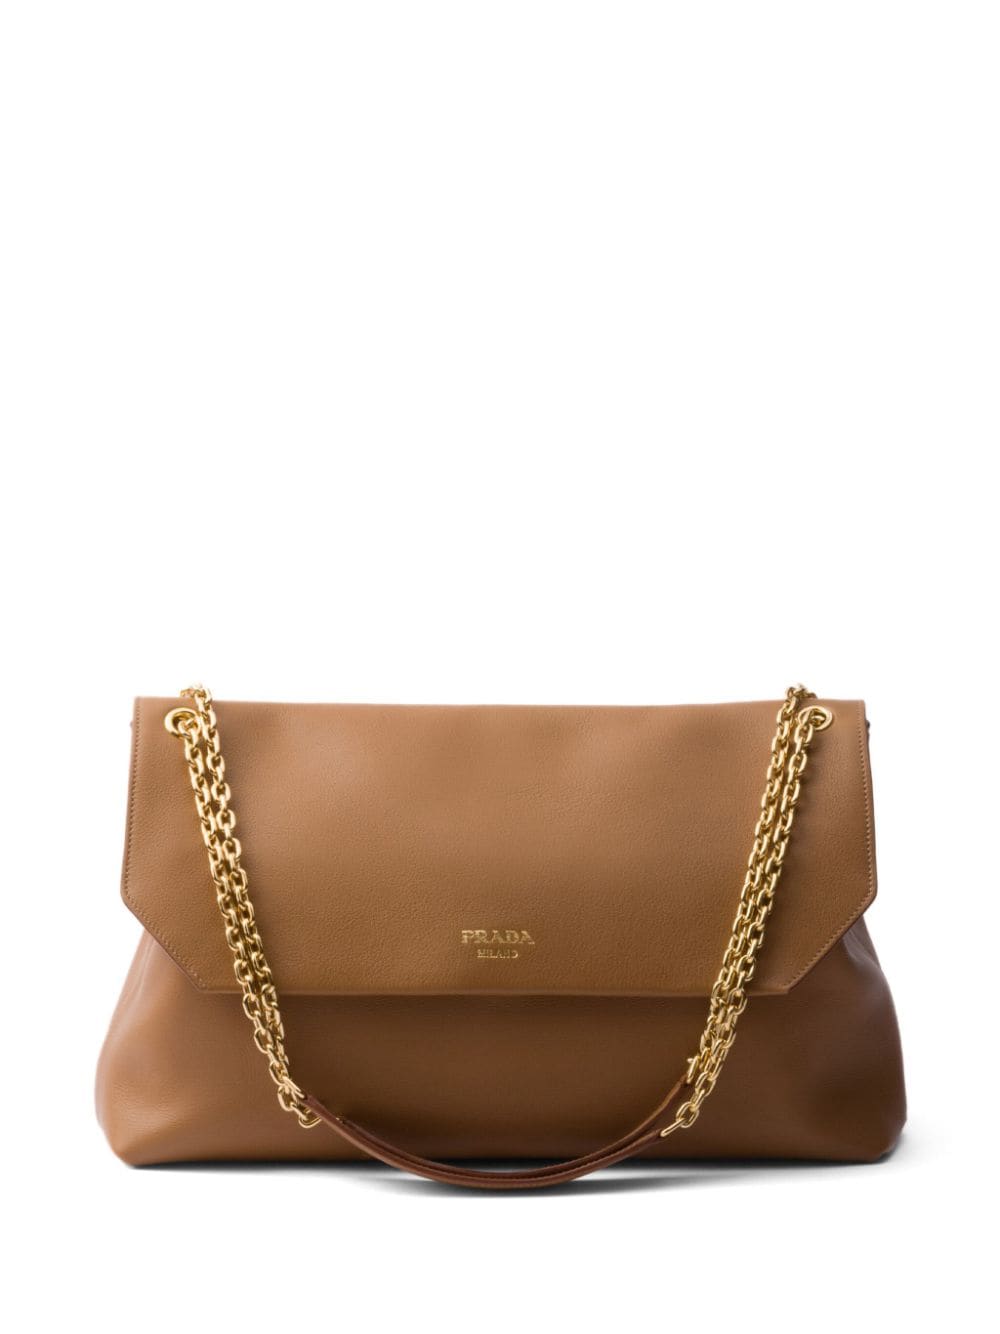 Prada large leather shoulder bag - Brown von Prada